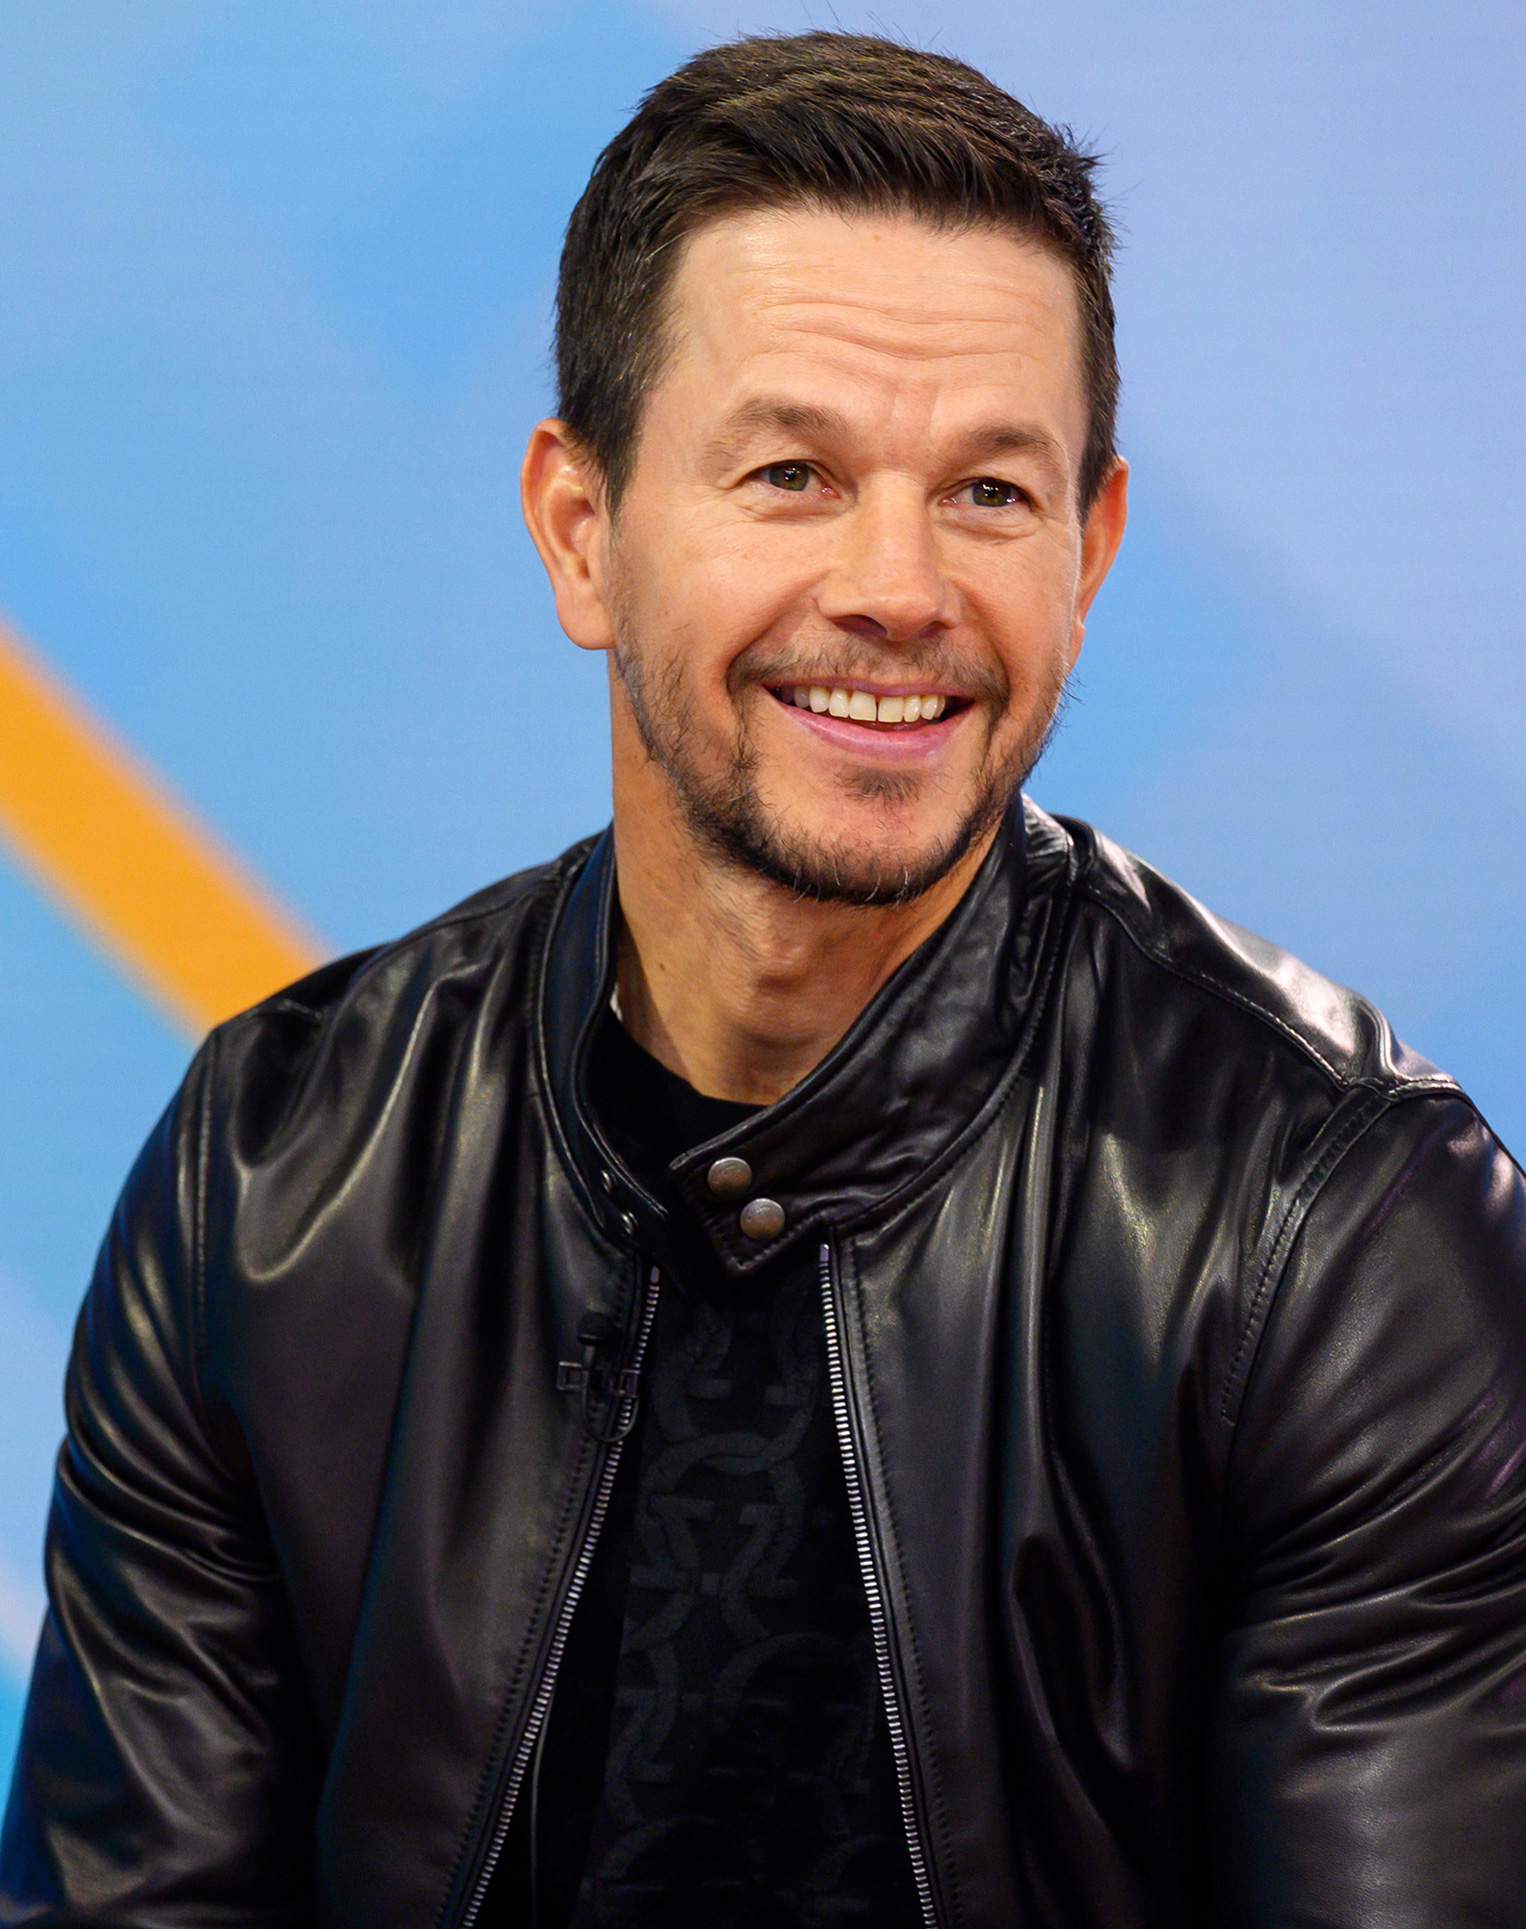 Mark-Wahlberg wearing black shirt and jacket